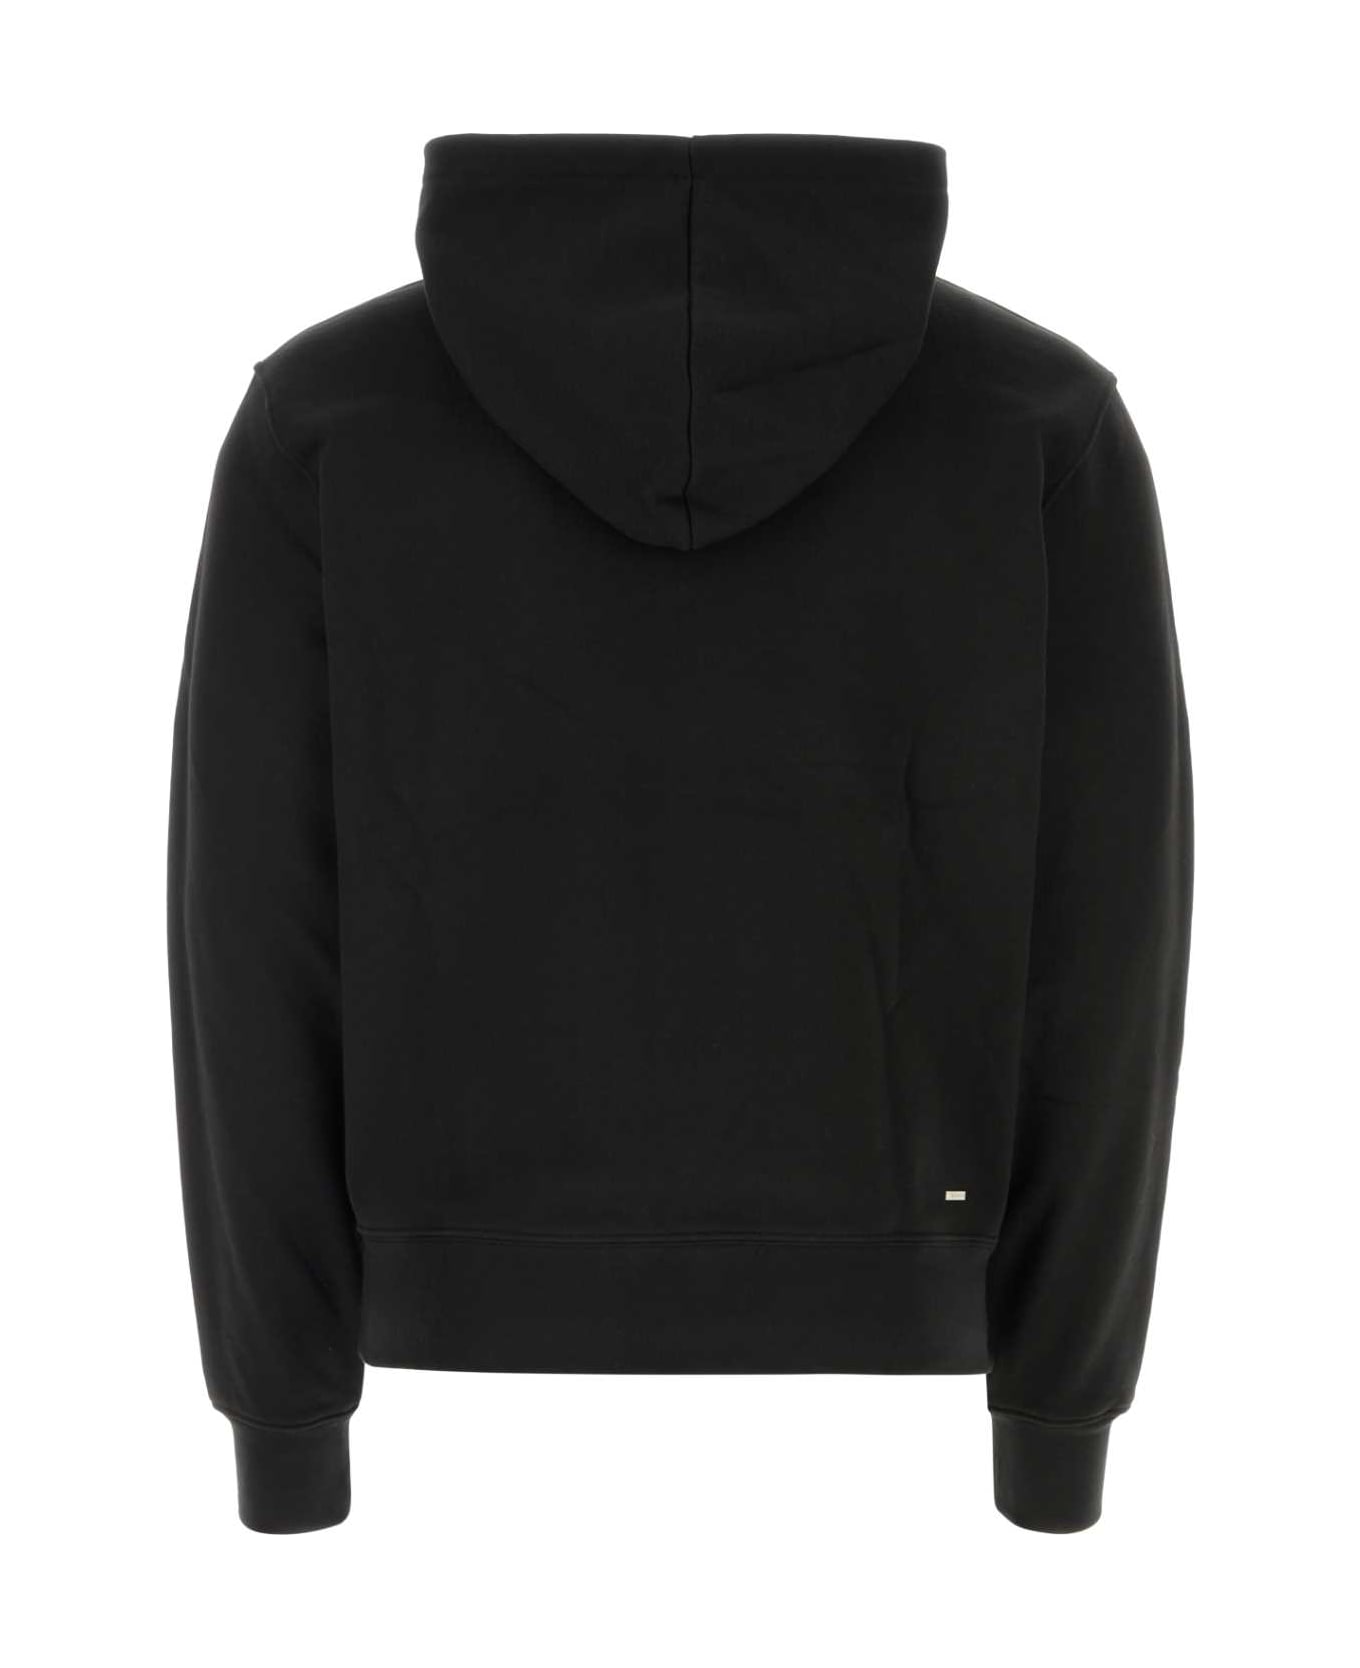 AMIRI Black Cotton Sweatshirt - BLACK フリース